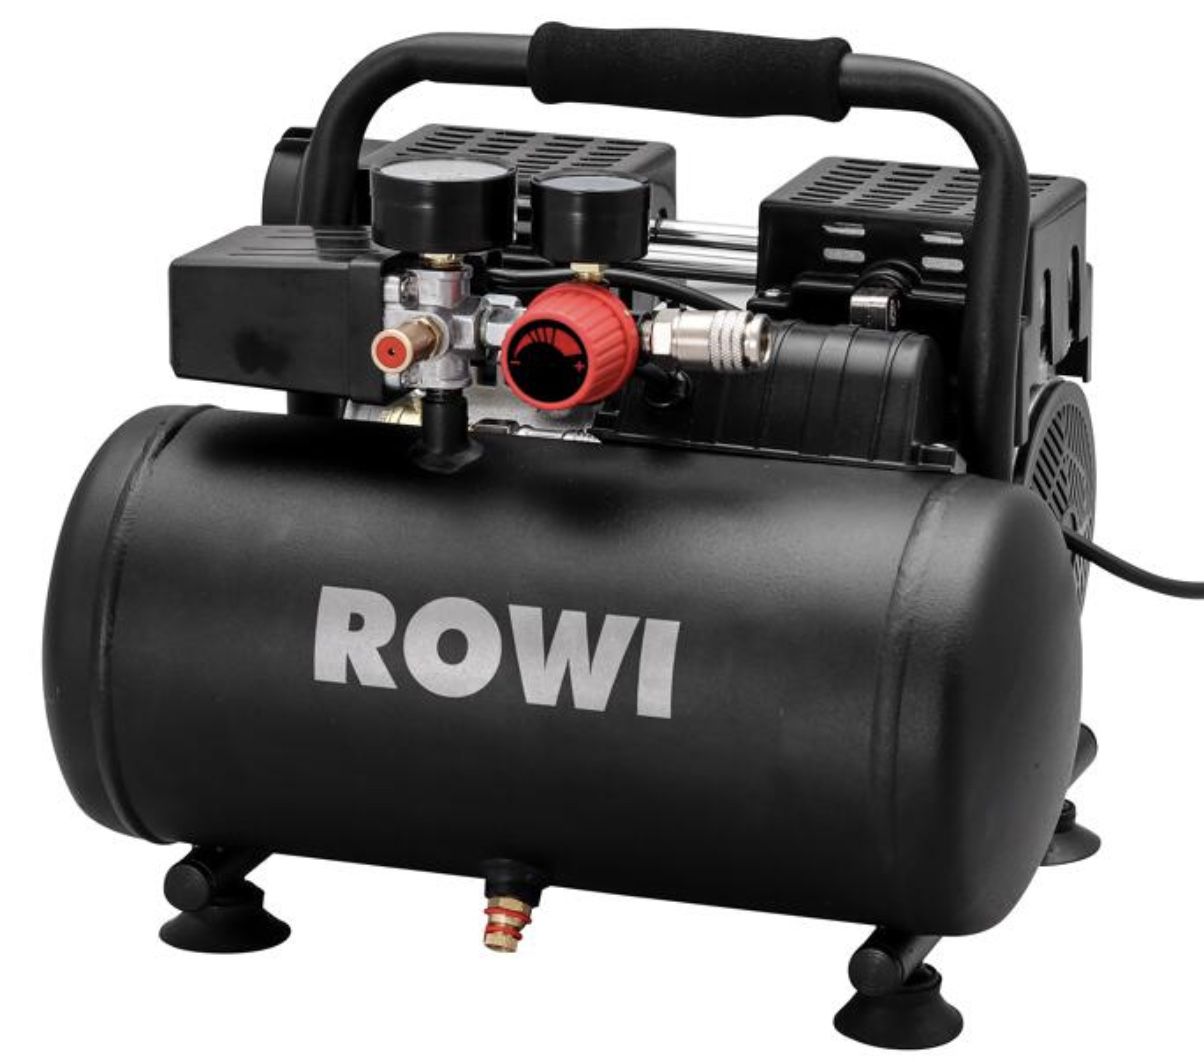 Rowi DKP 750 Kompressor mit max. Druck 8 bar für 95,94€ (statt 121€)